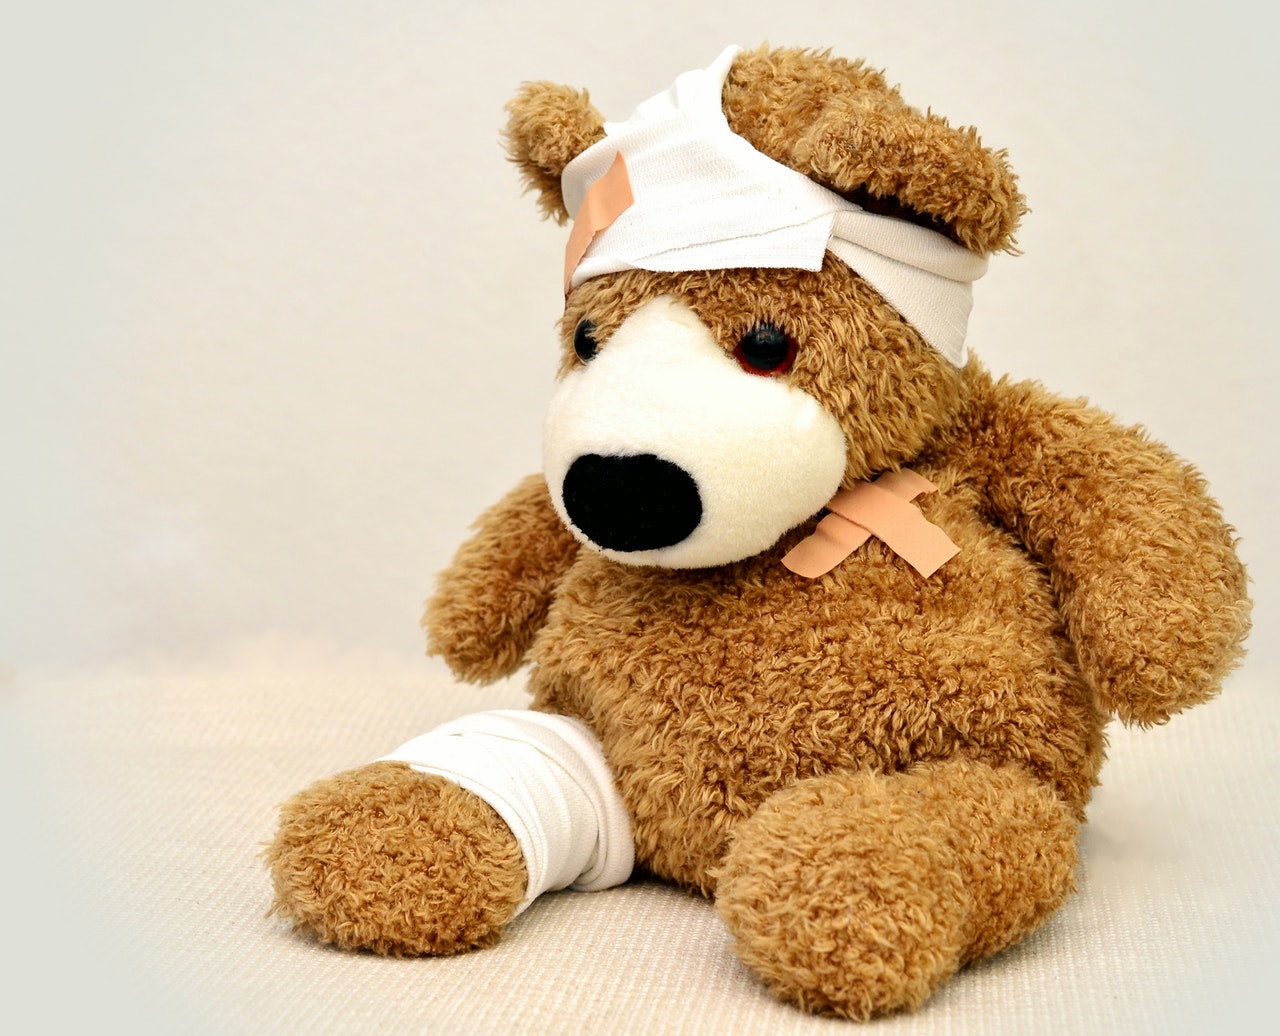 band aid bandages hurt 42230